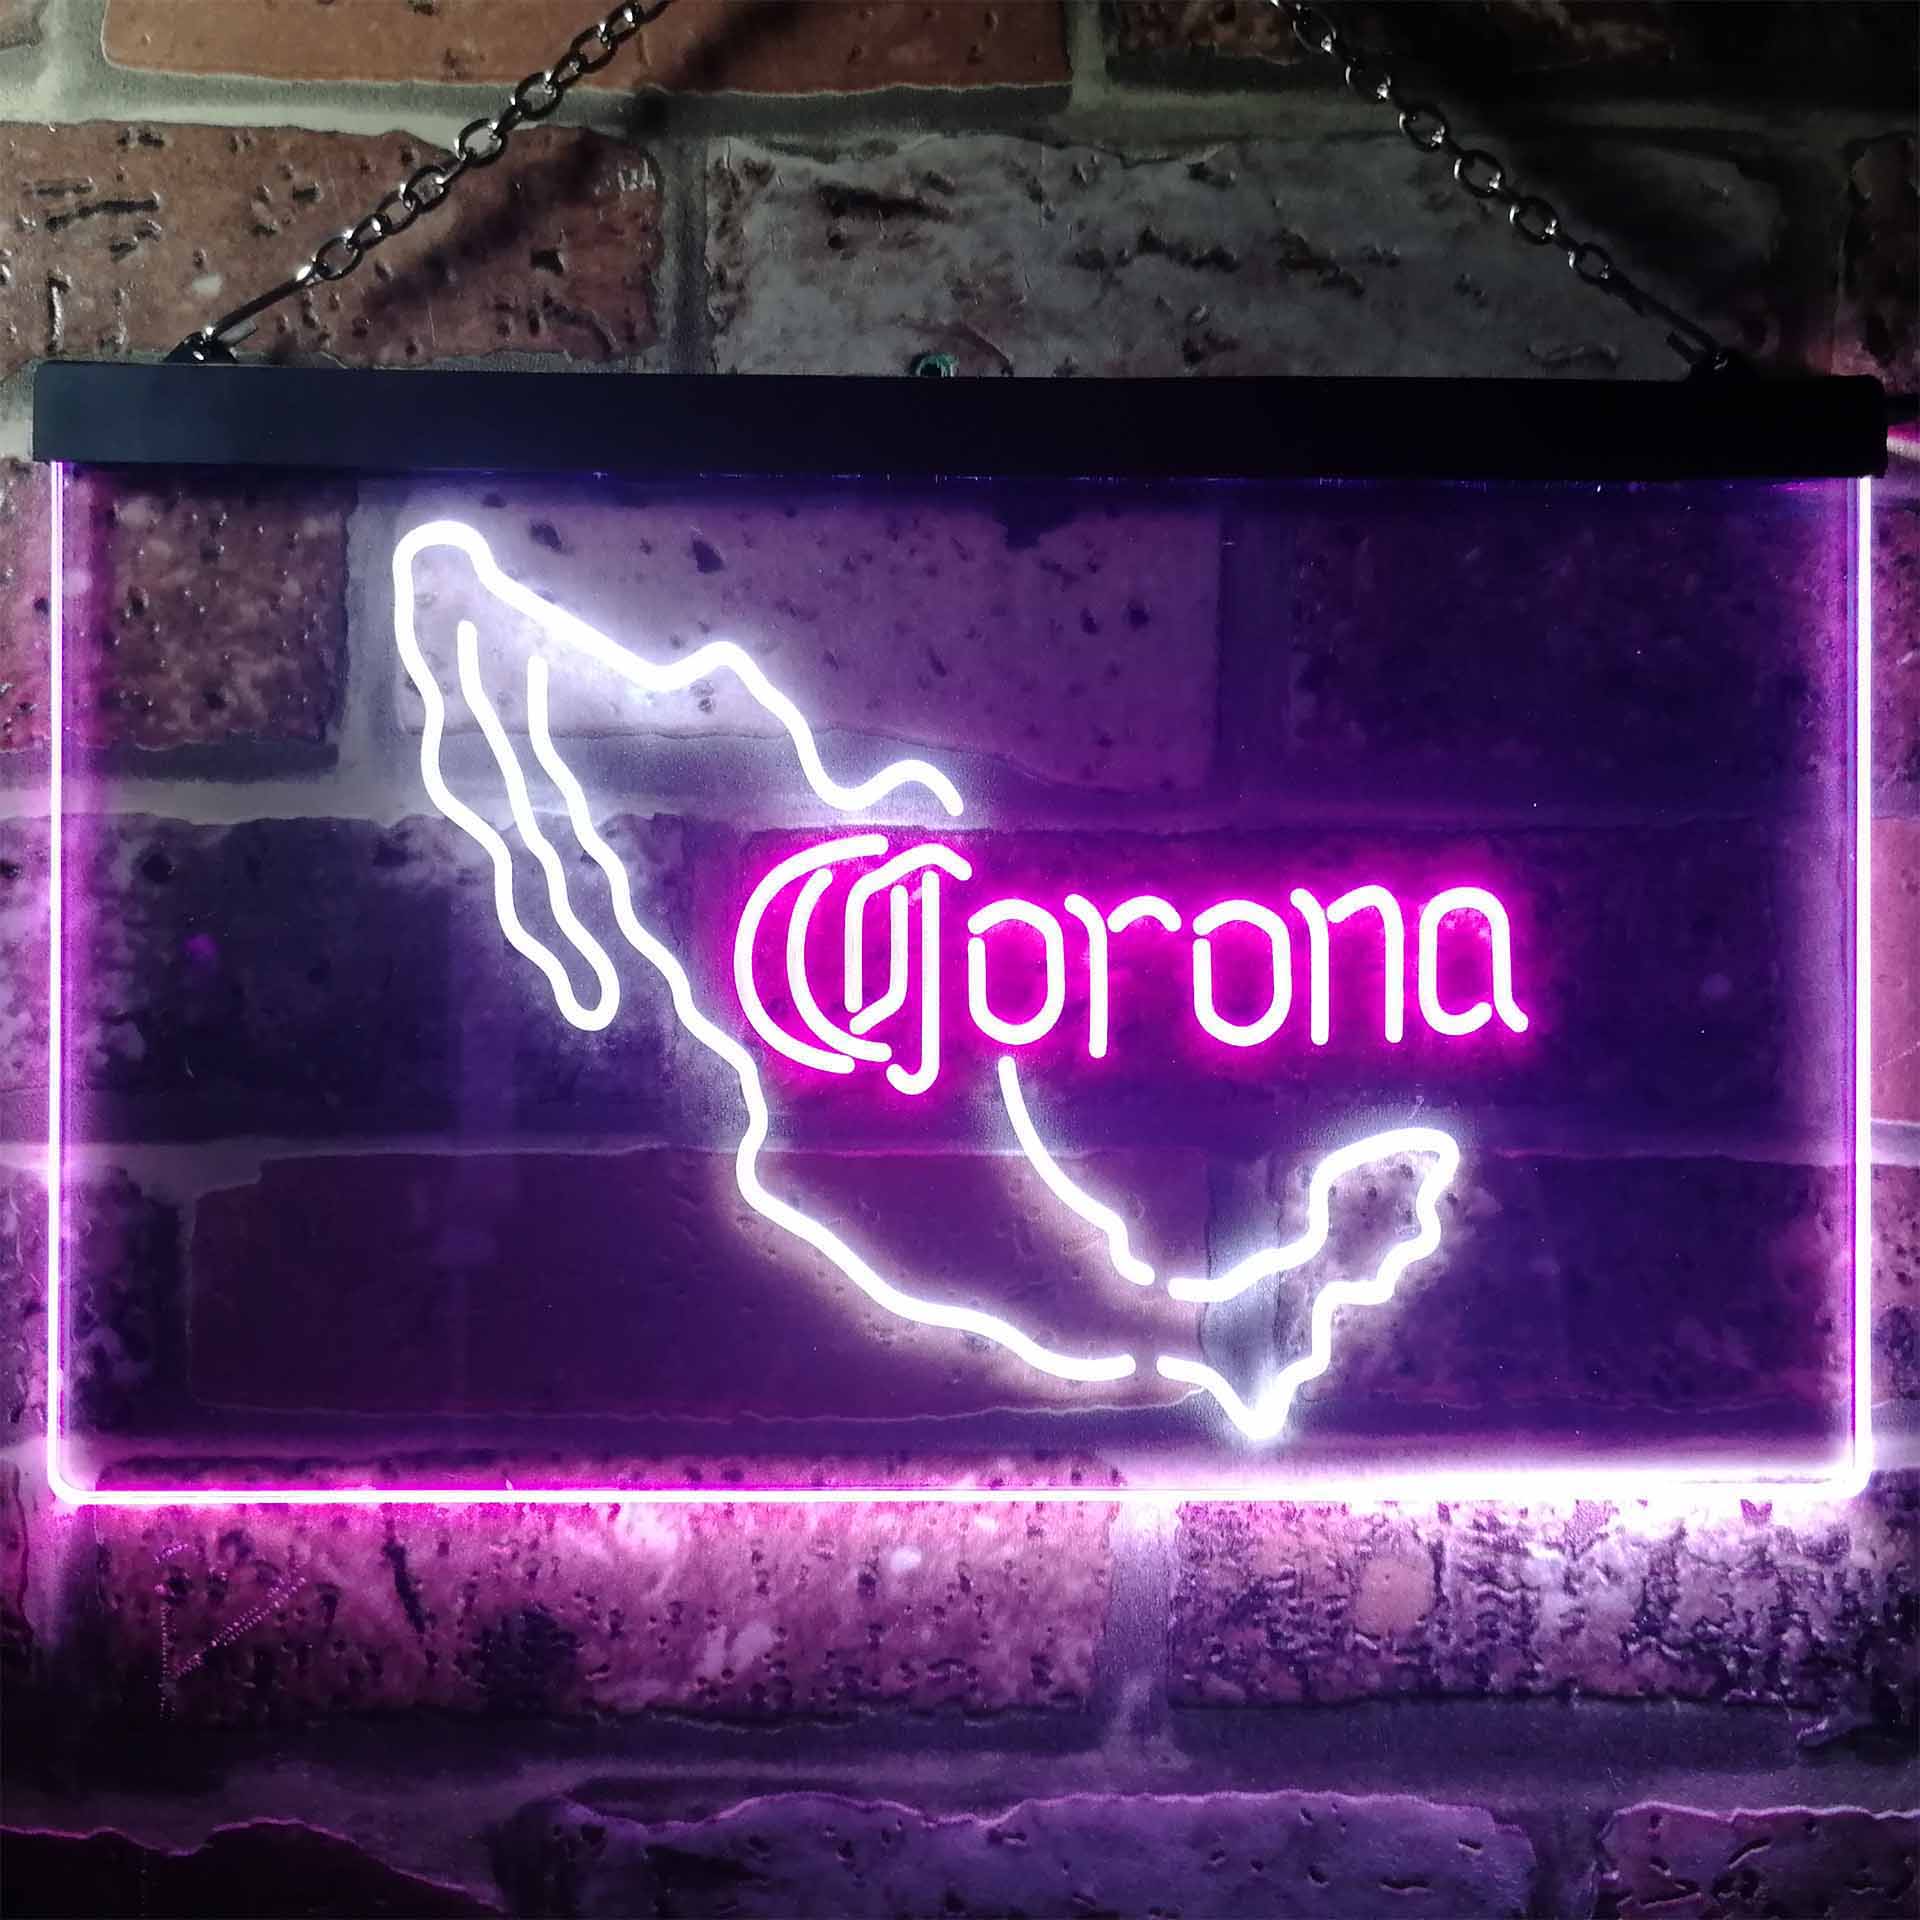 Corona Mexico Cerveza Neon LED Sign